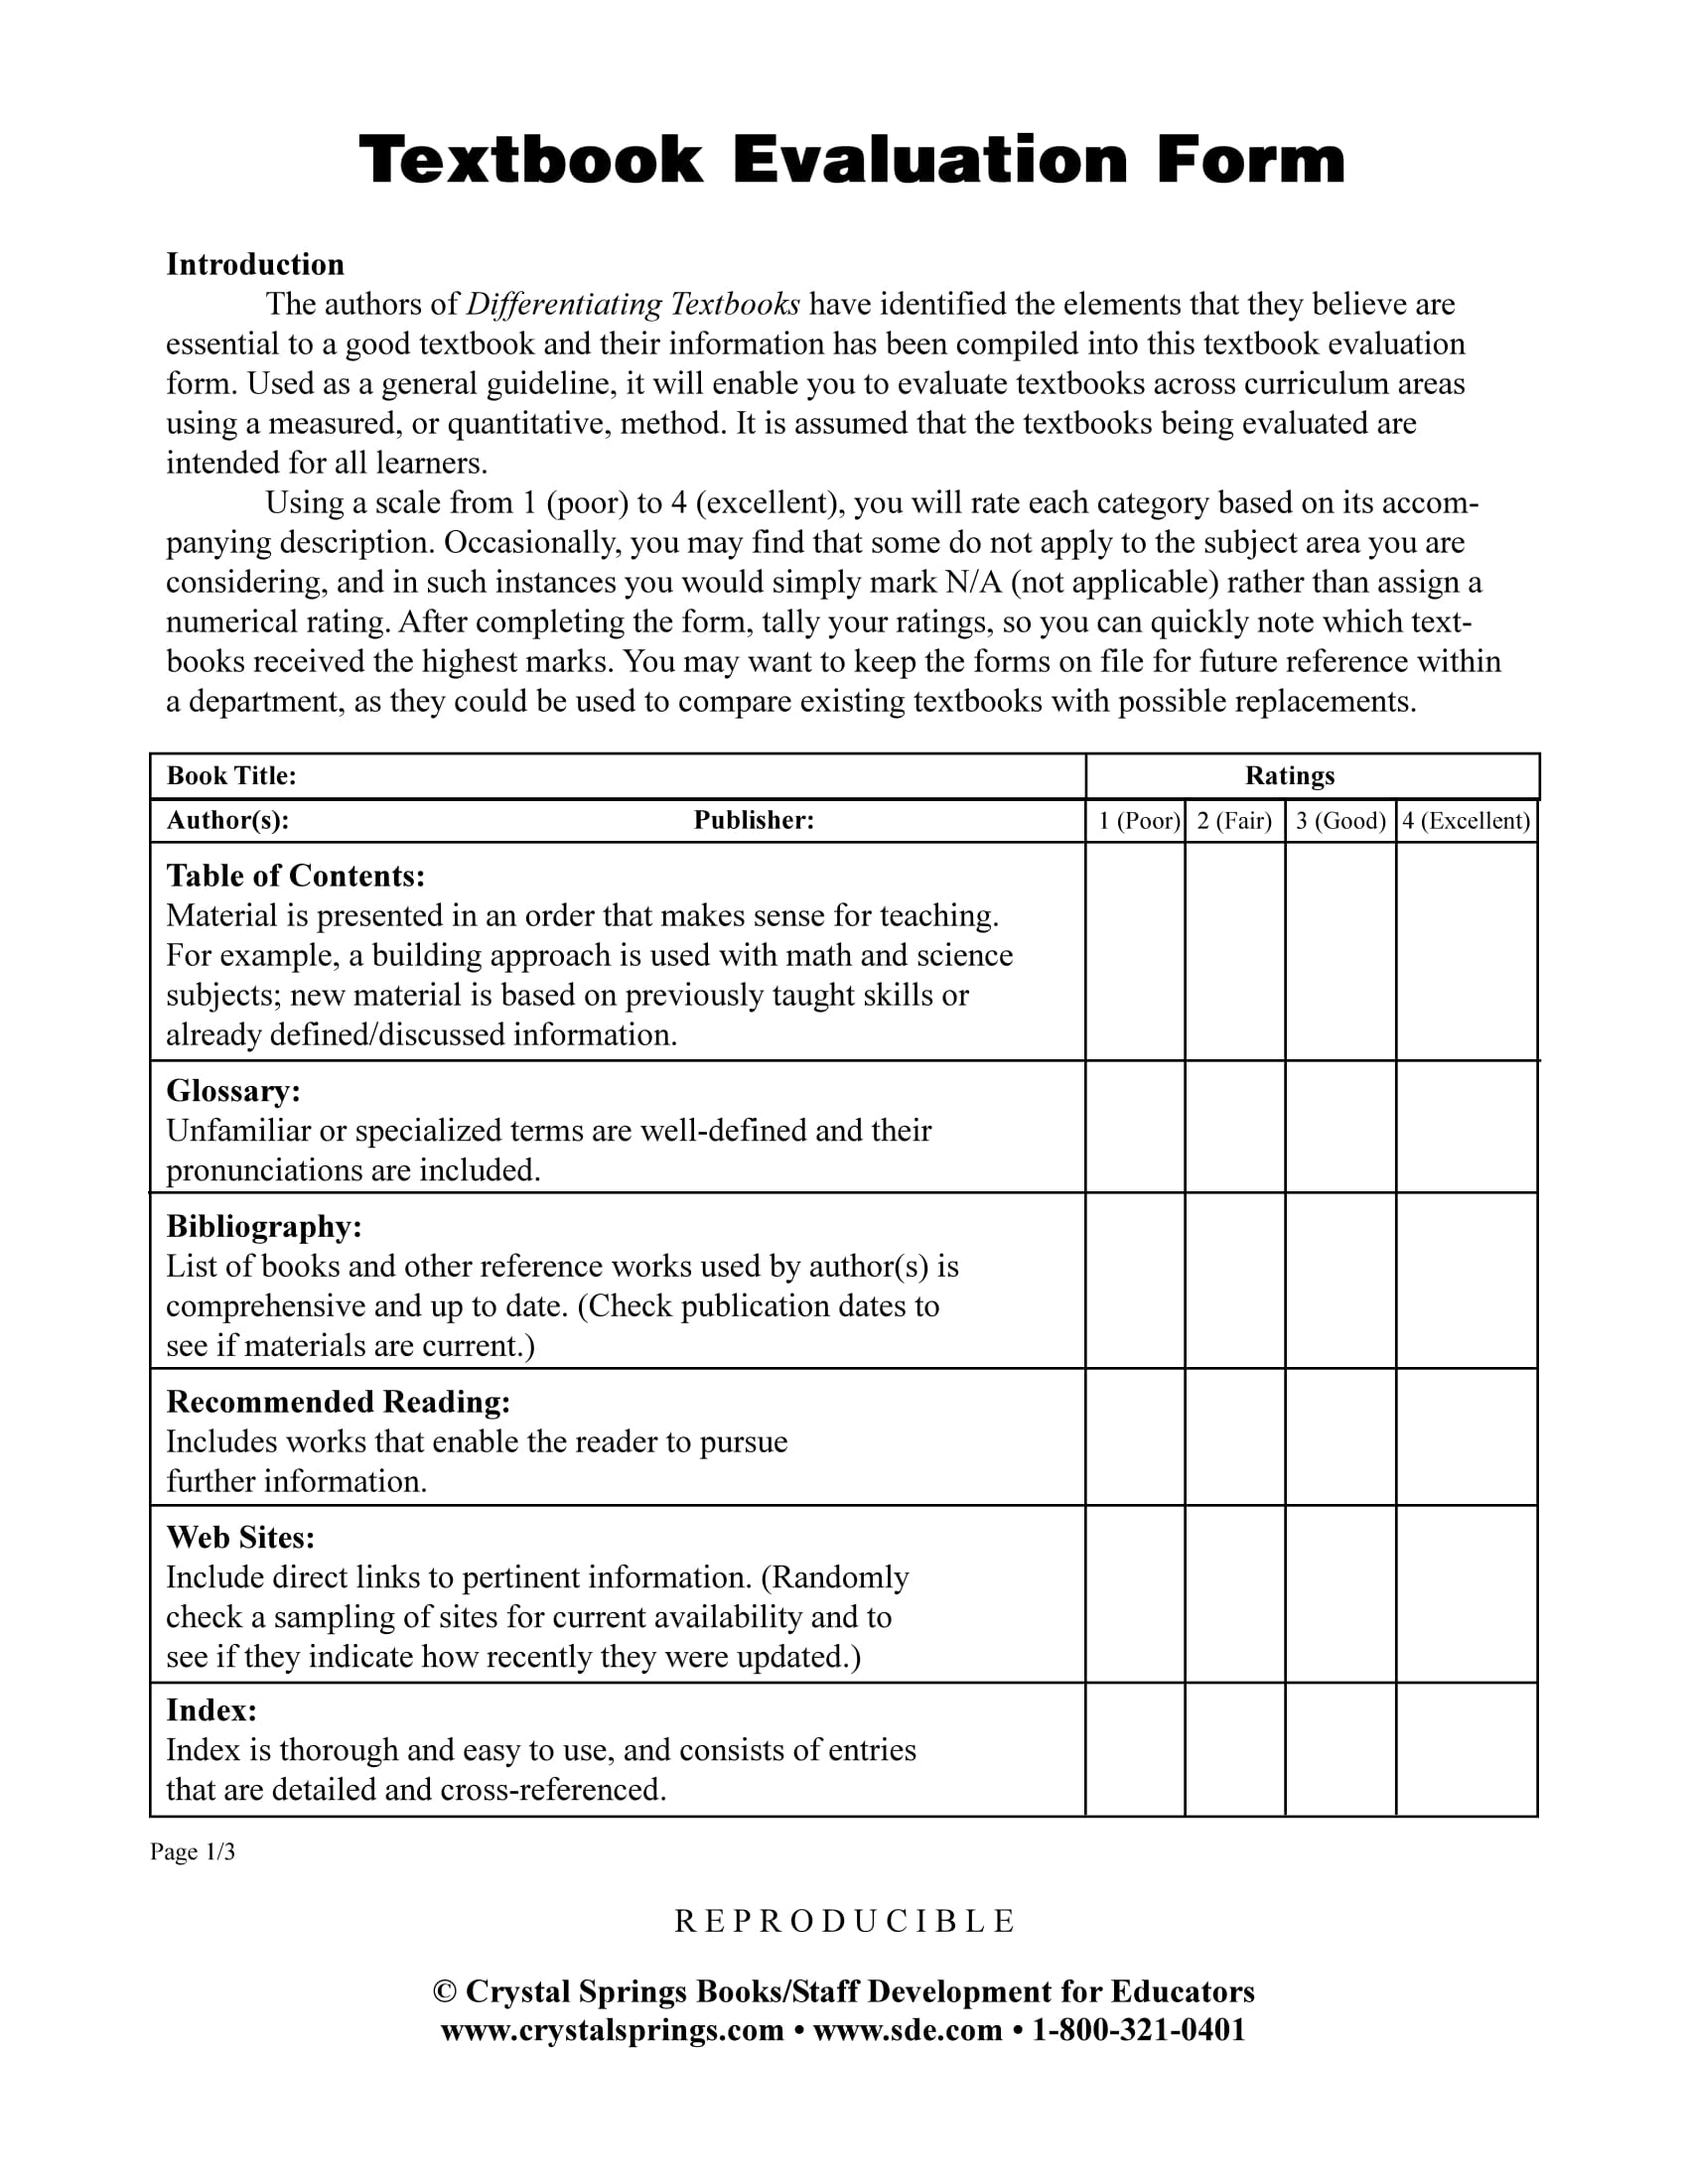 textbook evaluation form sample 1